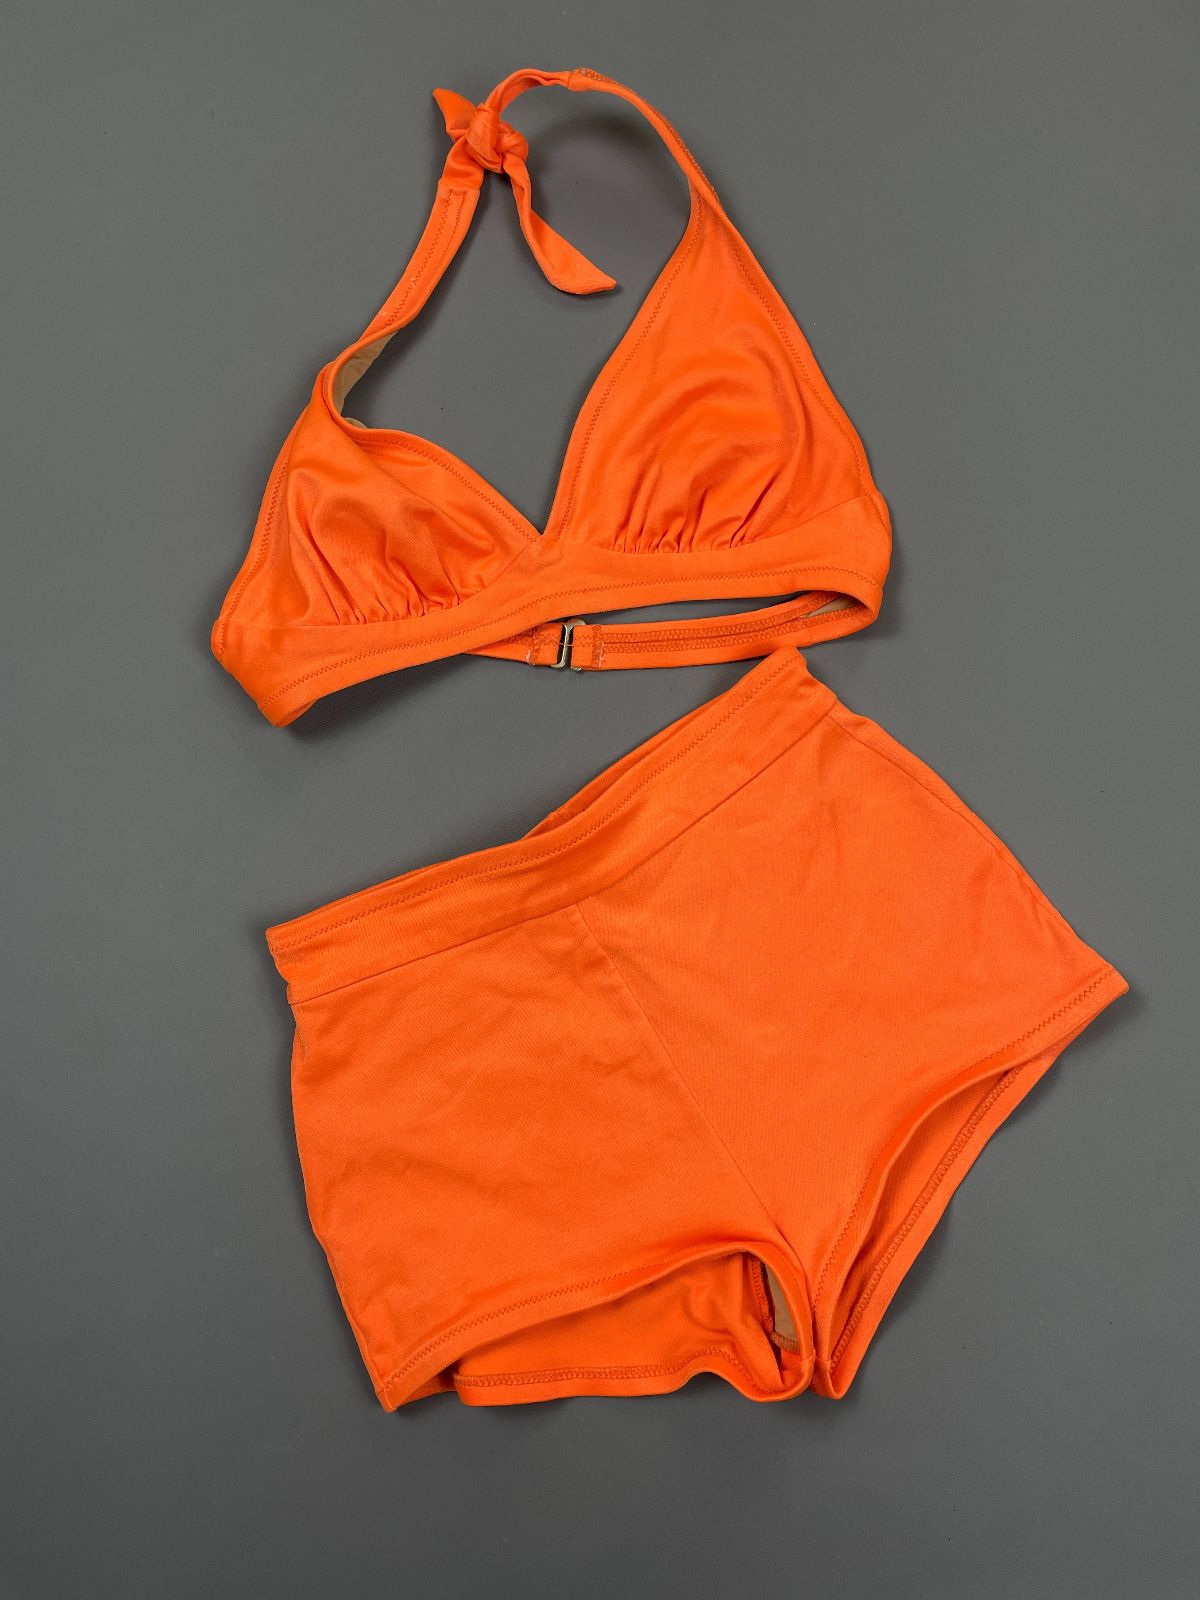 1960s Bright Orange Two Piece Bathing Suit Shorts Set